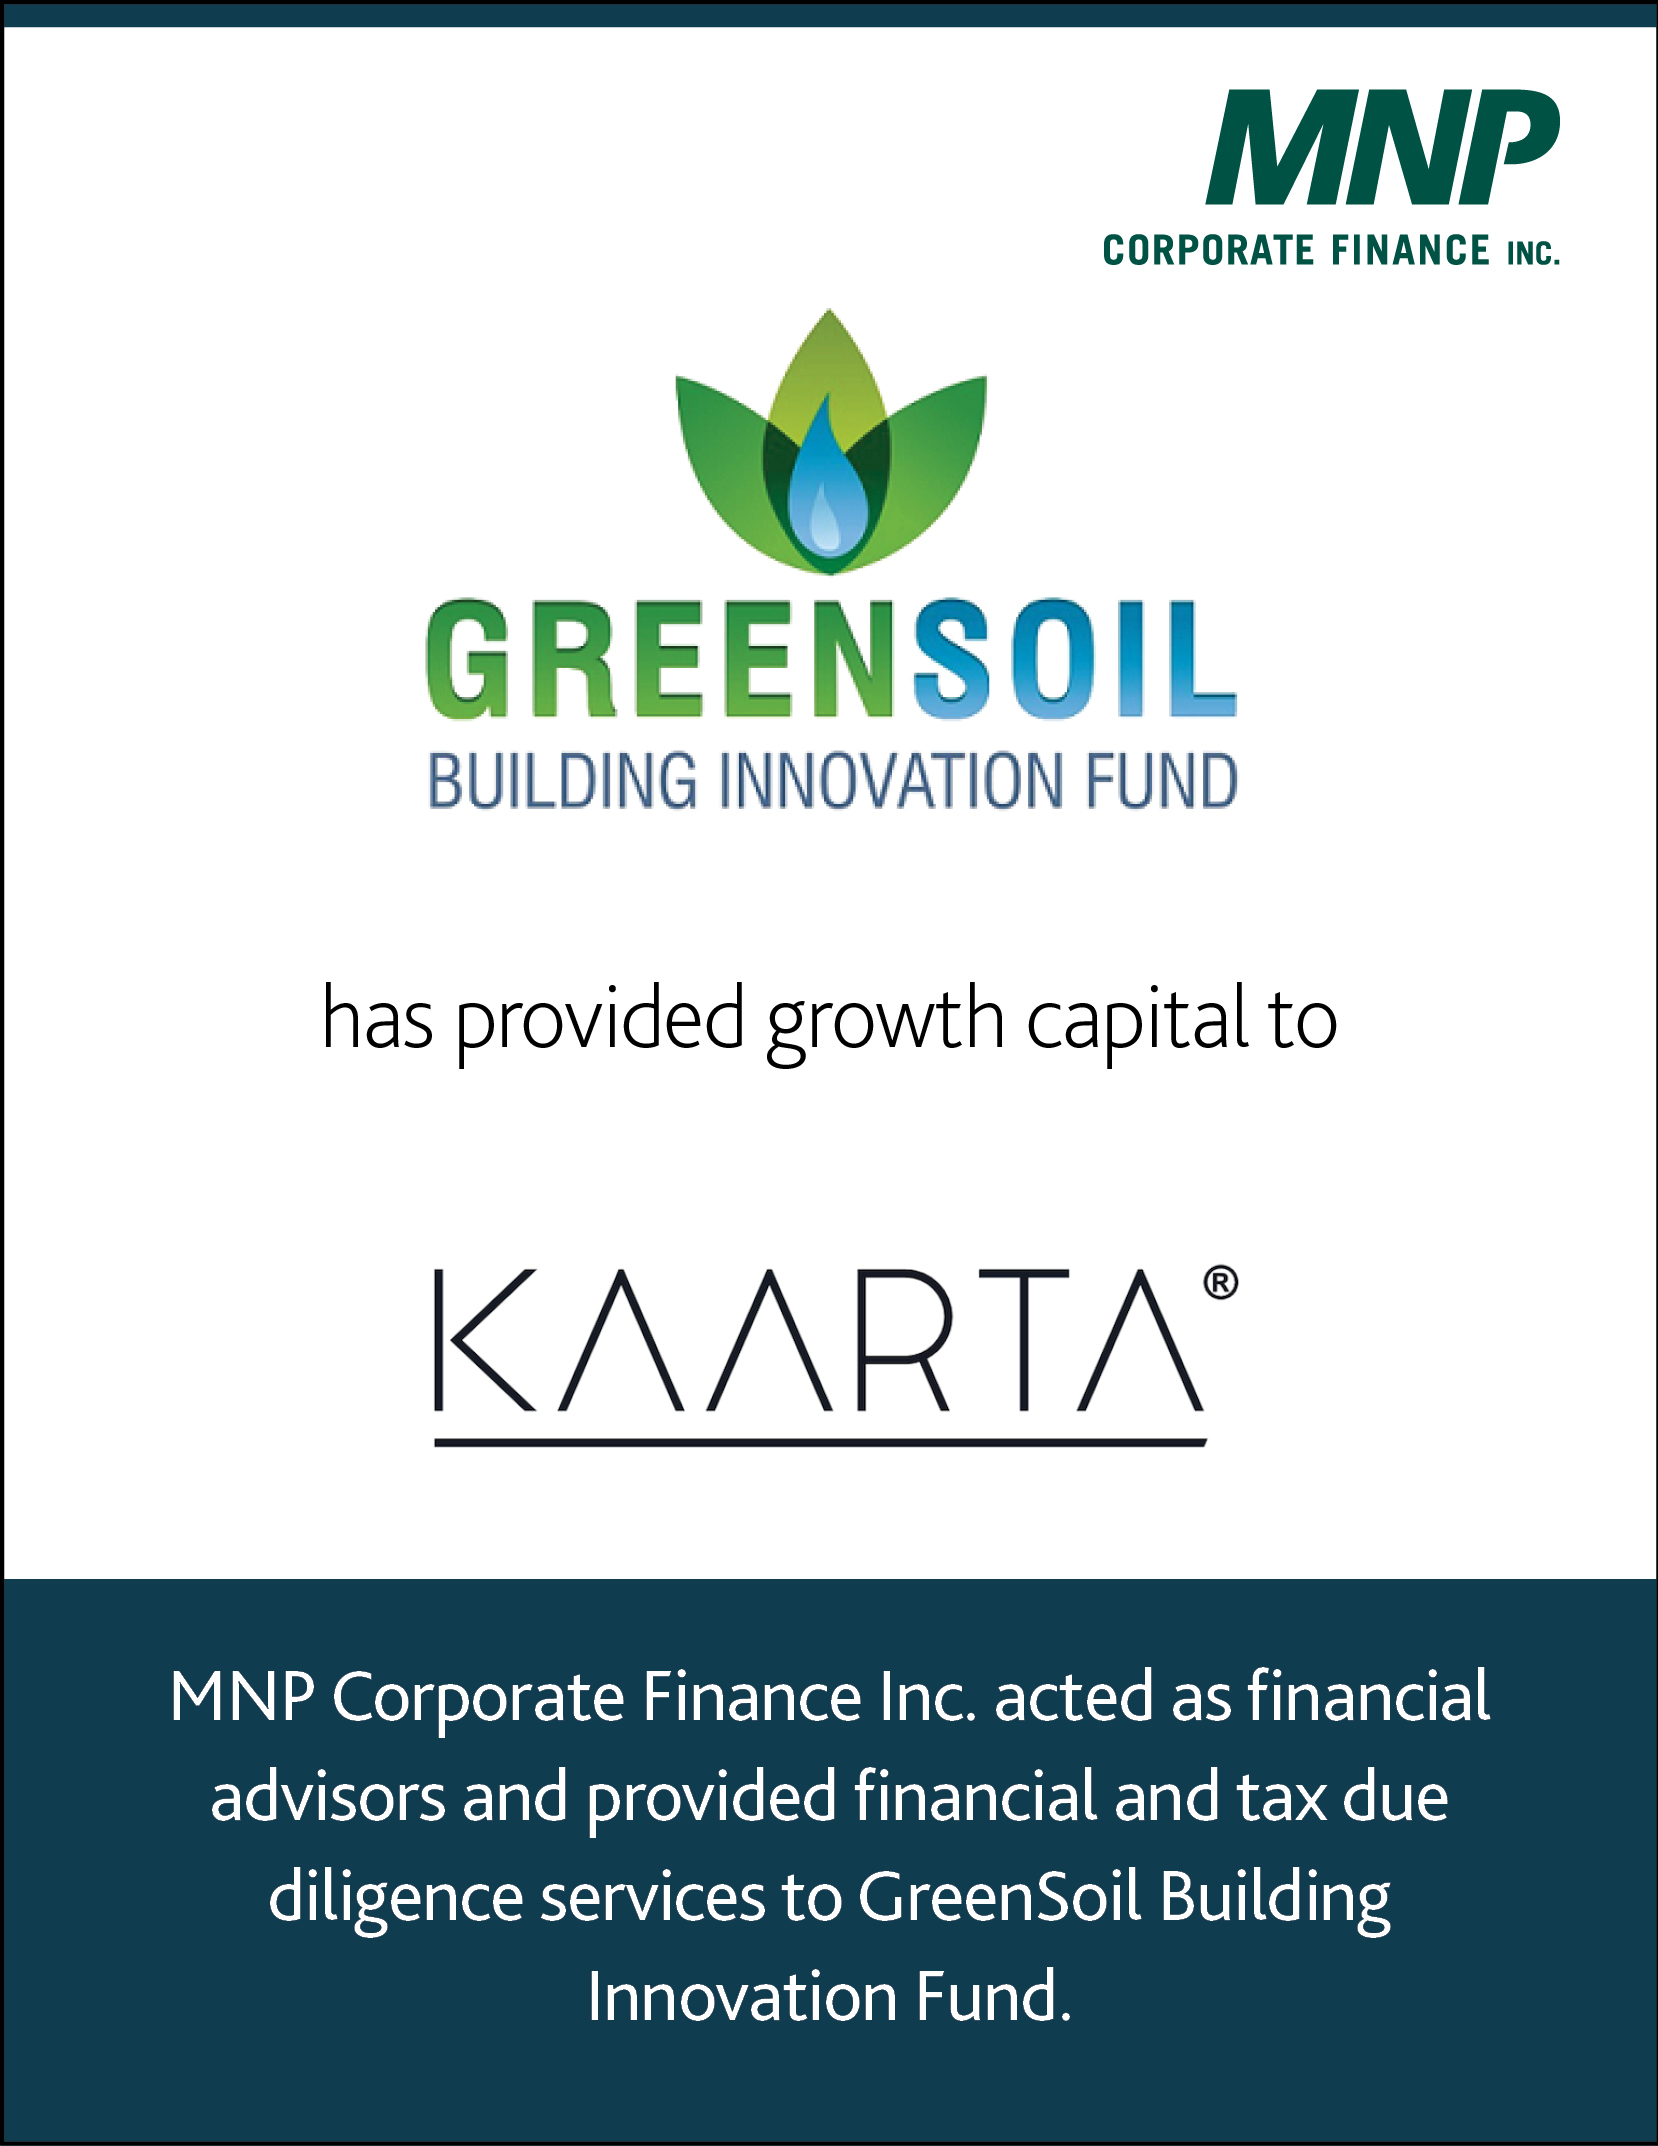 GreenSoil Building Innovation Fund has provided growth capital to Kaarta, Inc.